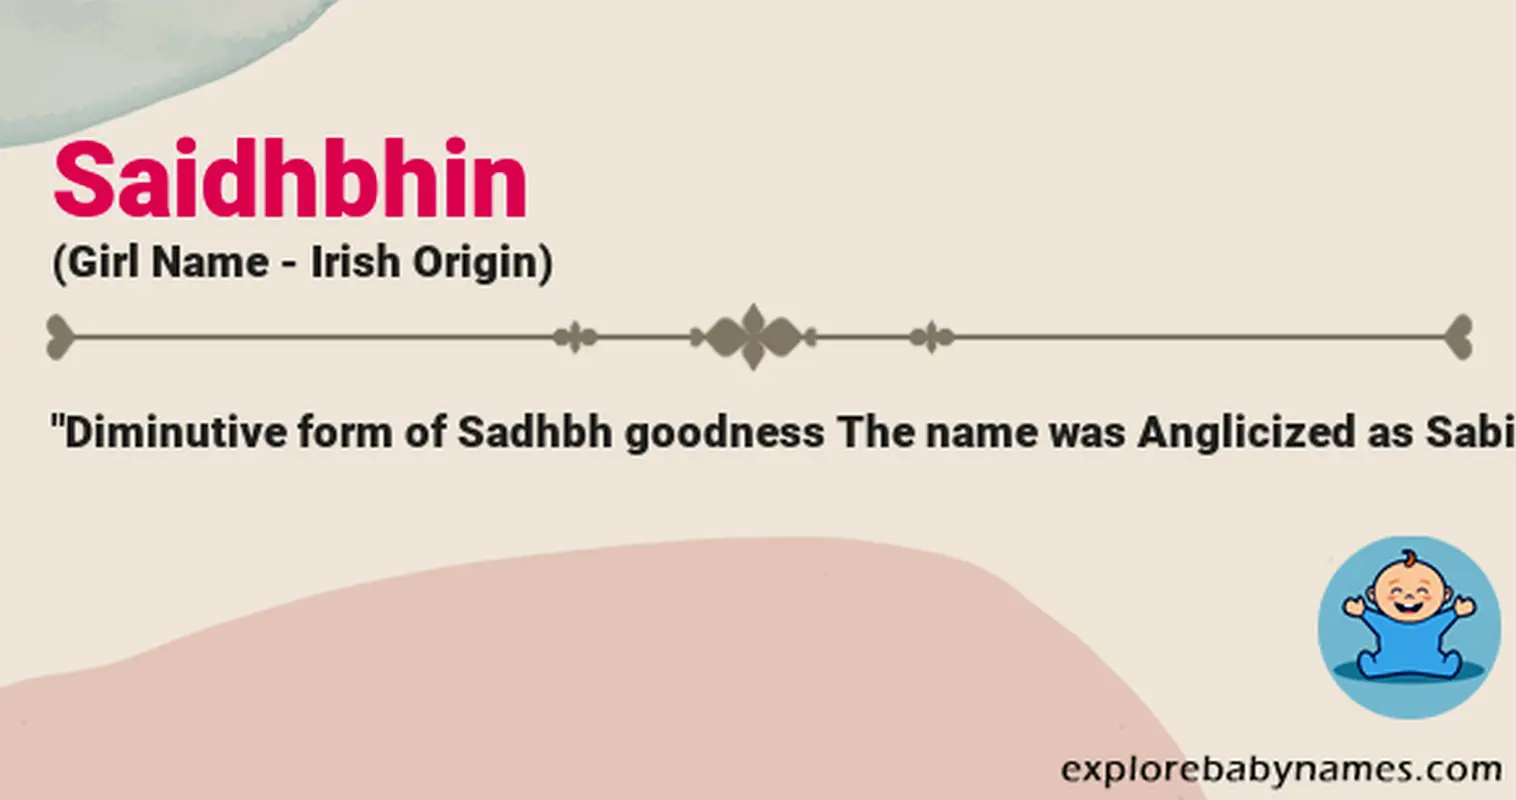 Meaning of Saidhbhin